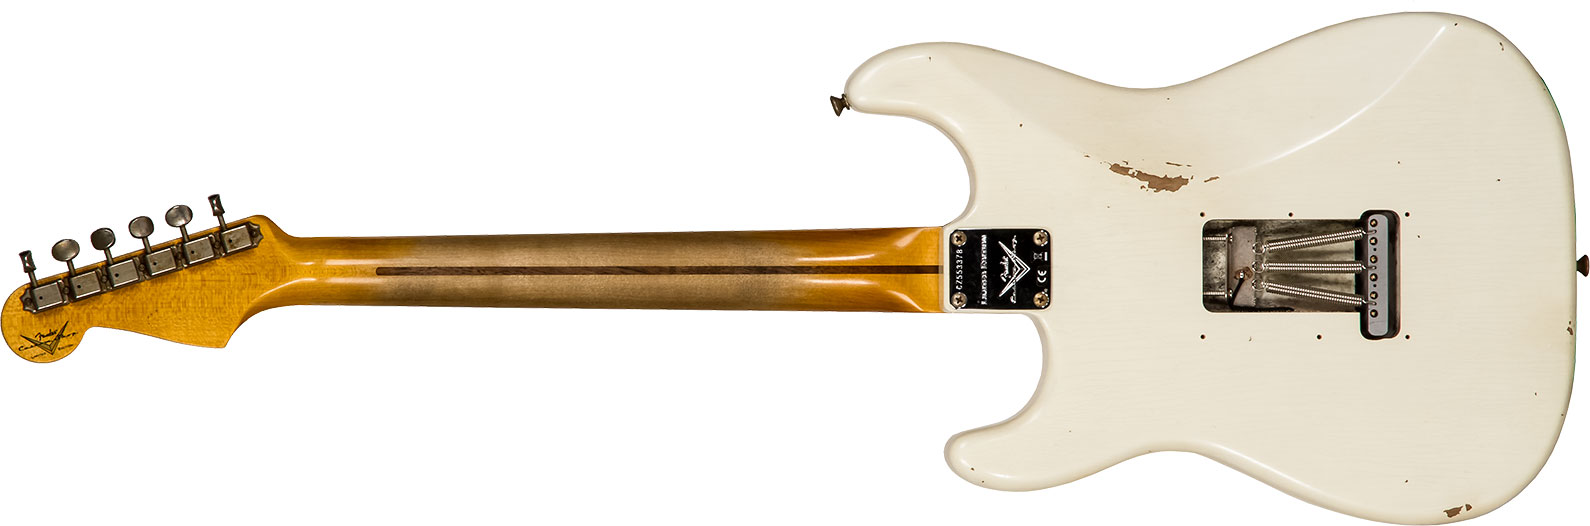 Fender Custom Shop Strat Poblano Ii 3s Trem Mn #cz555378 - Relic Olympic White - Guitarra eléctrica con forma de str. - Variation 1